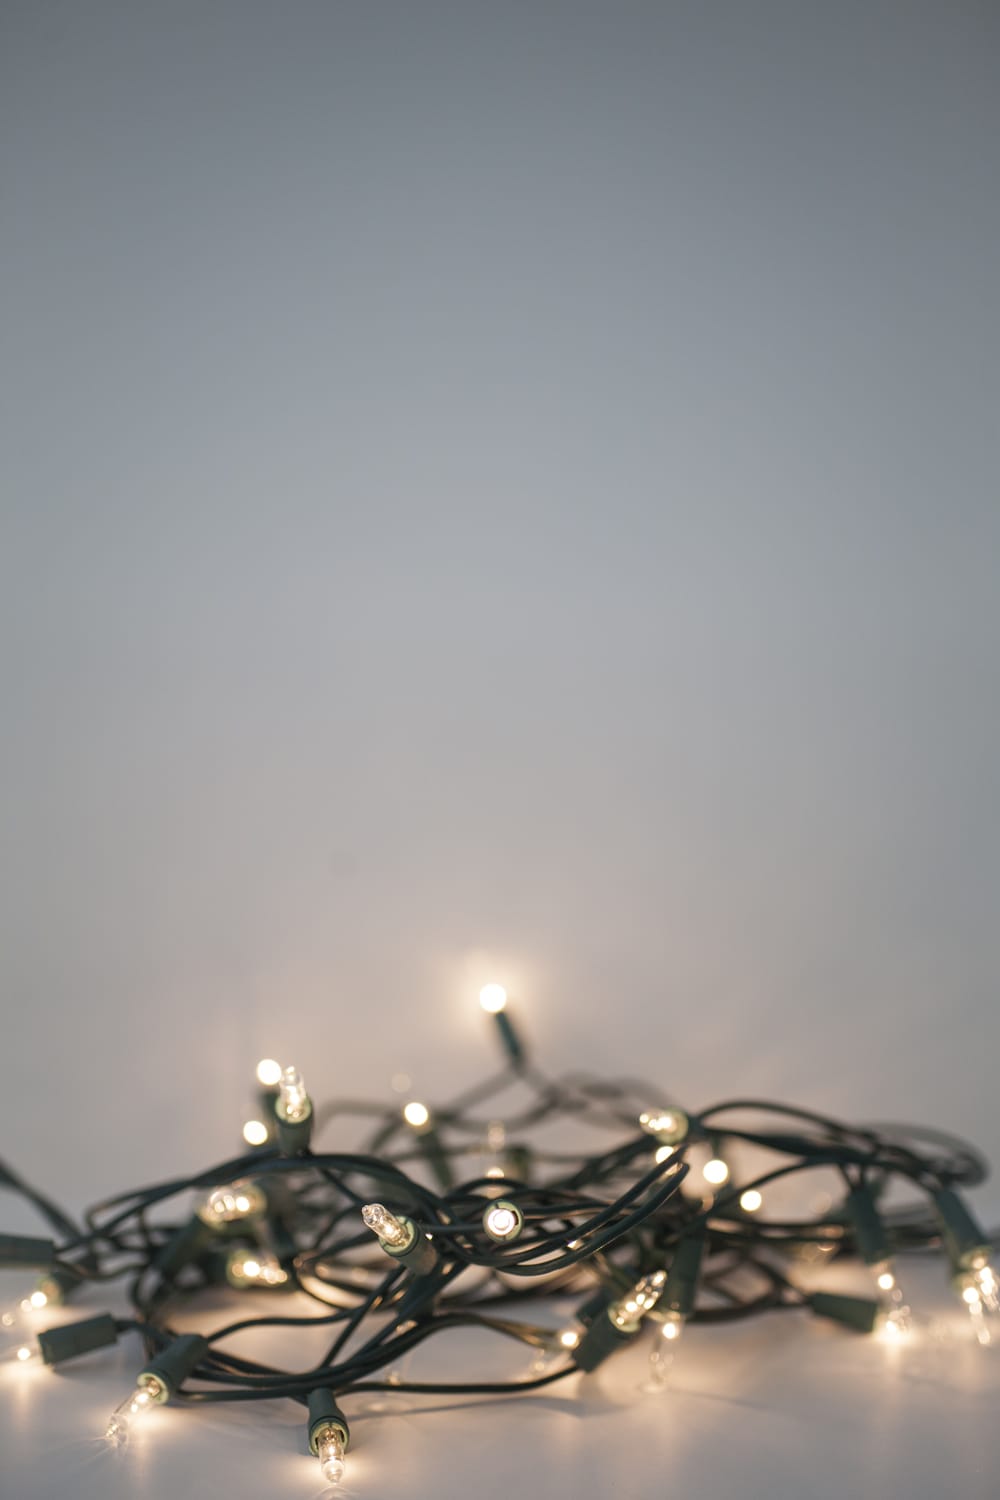 Snarled strings of lights